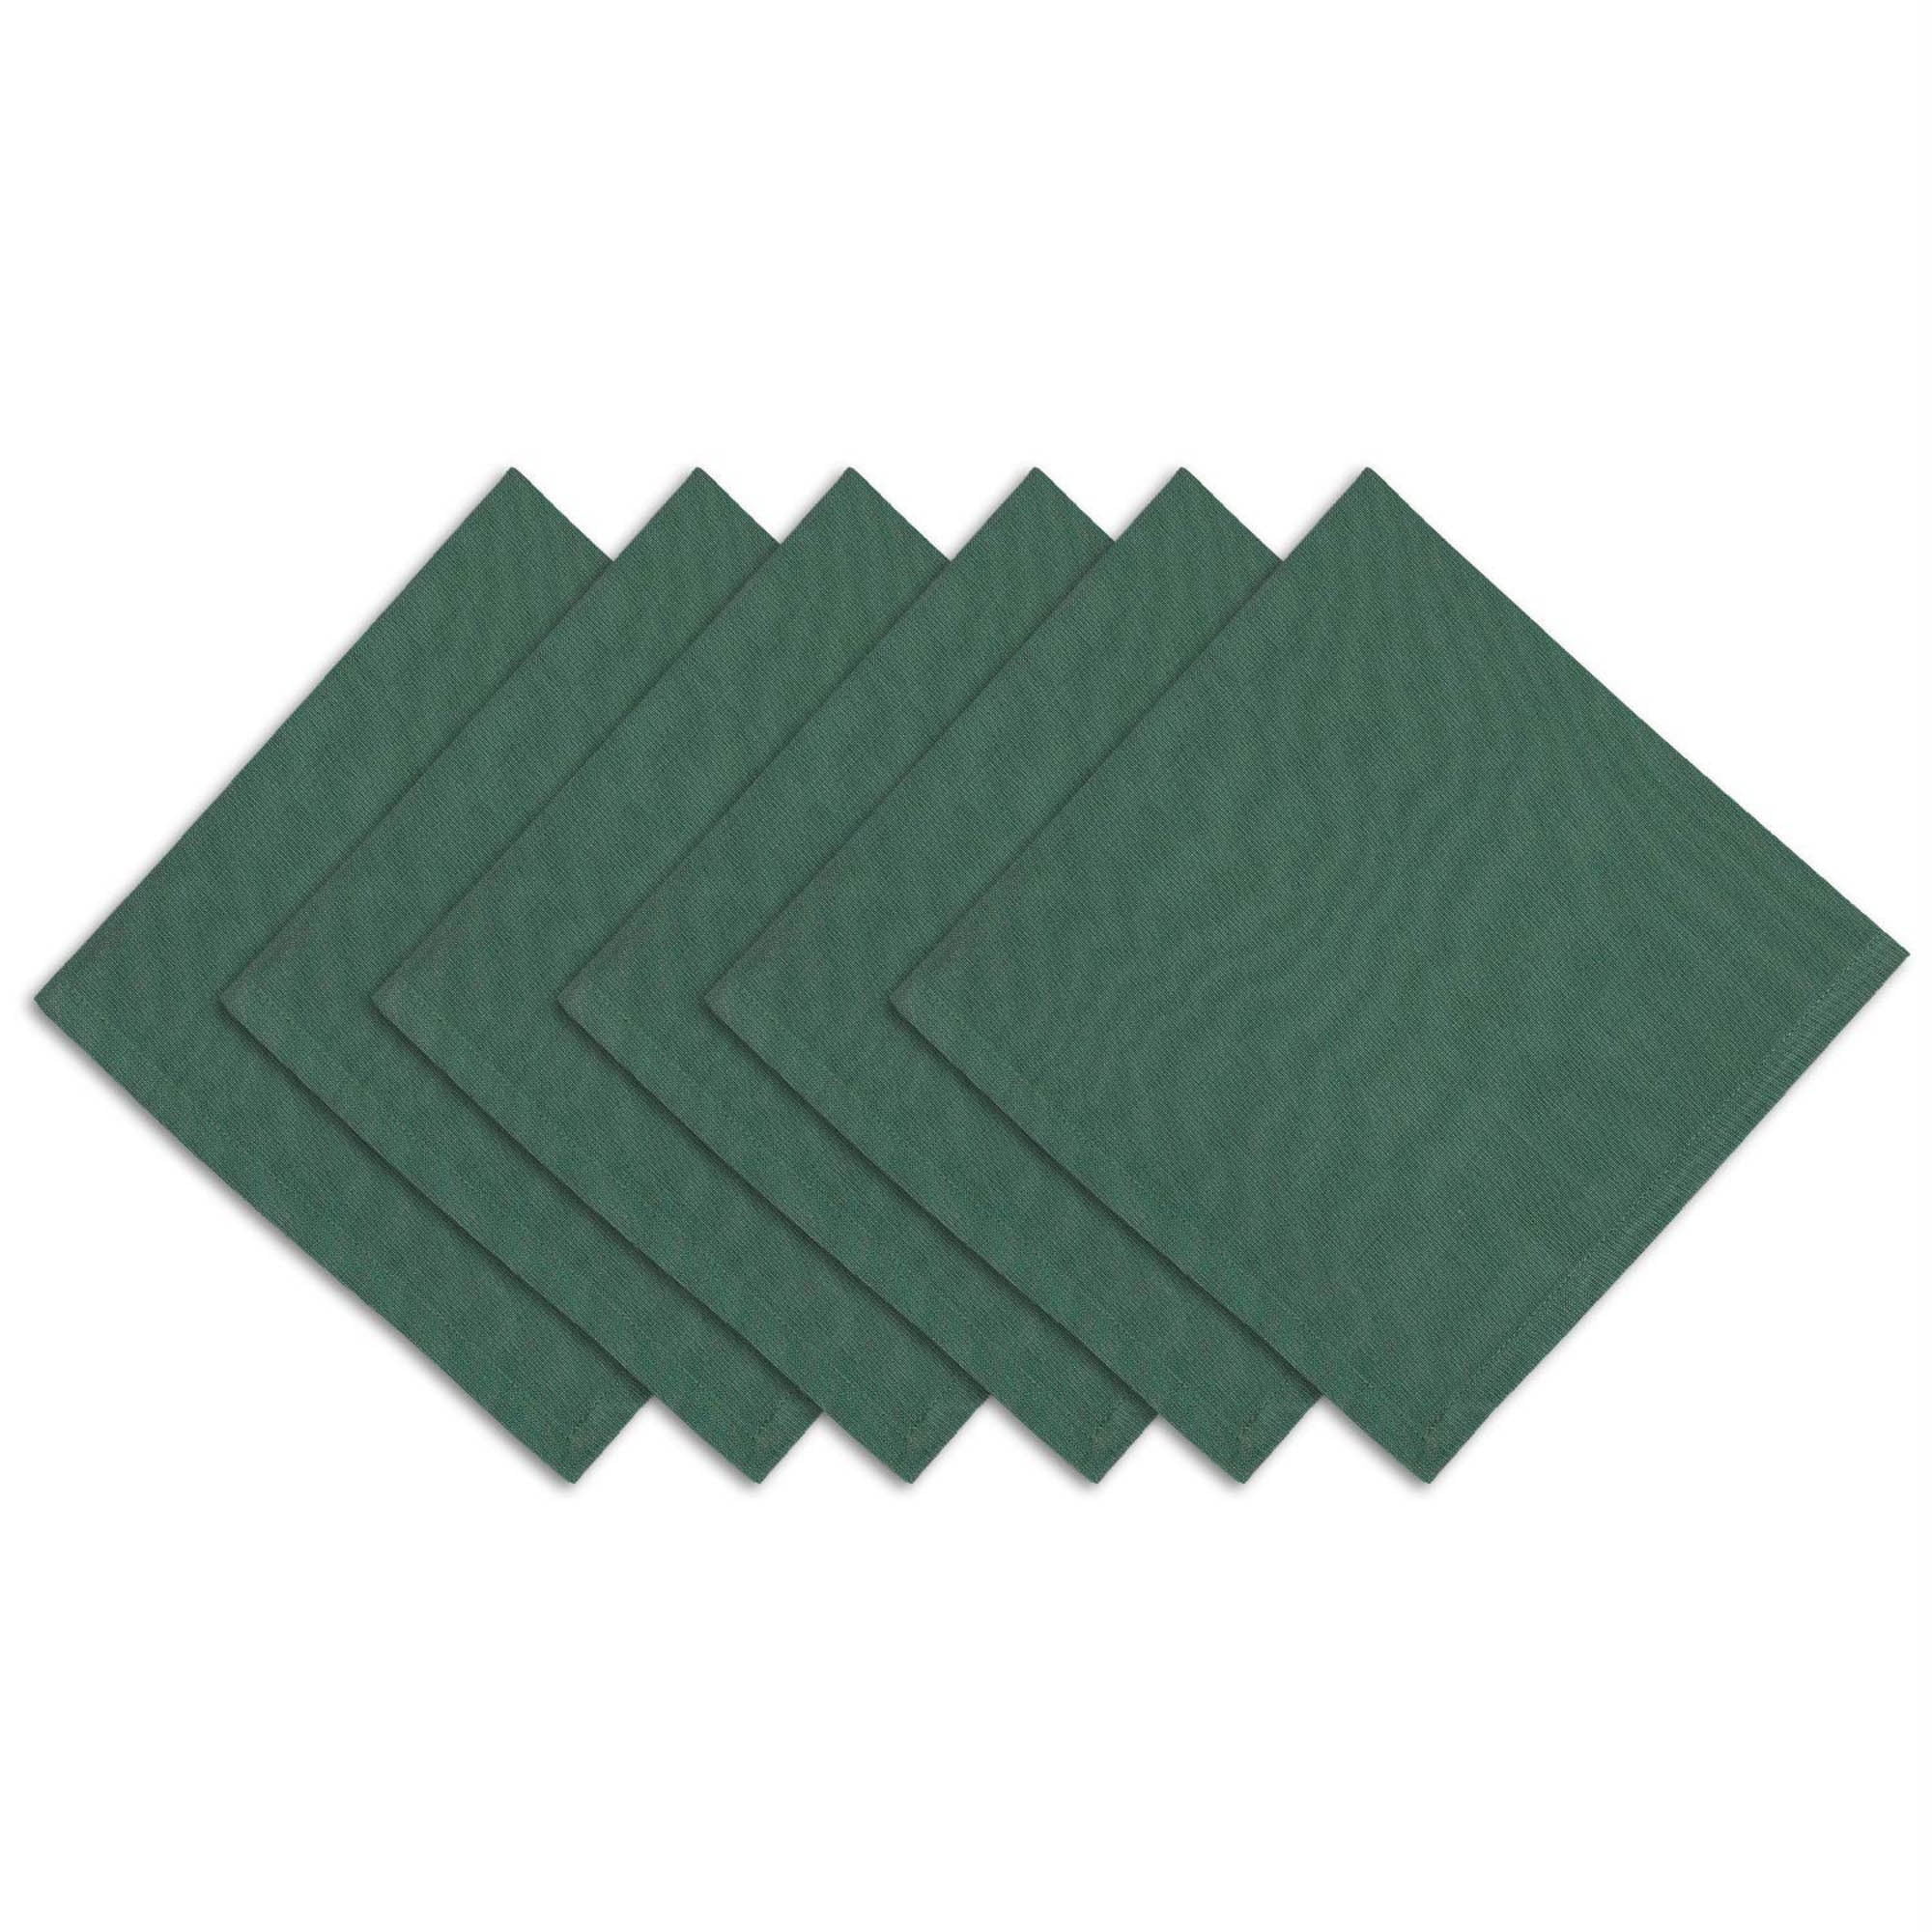 Fabric Textile Products, Inc. Napkin Set of 4, 100% Cotton, 20x20, Veggie Sketch - 20 x 20 - Green